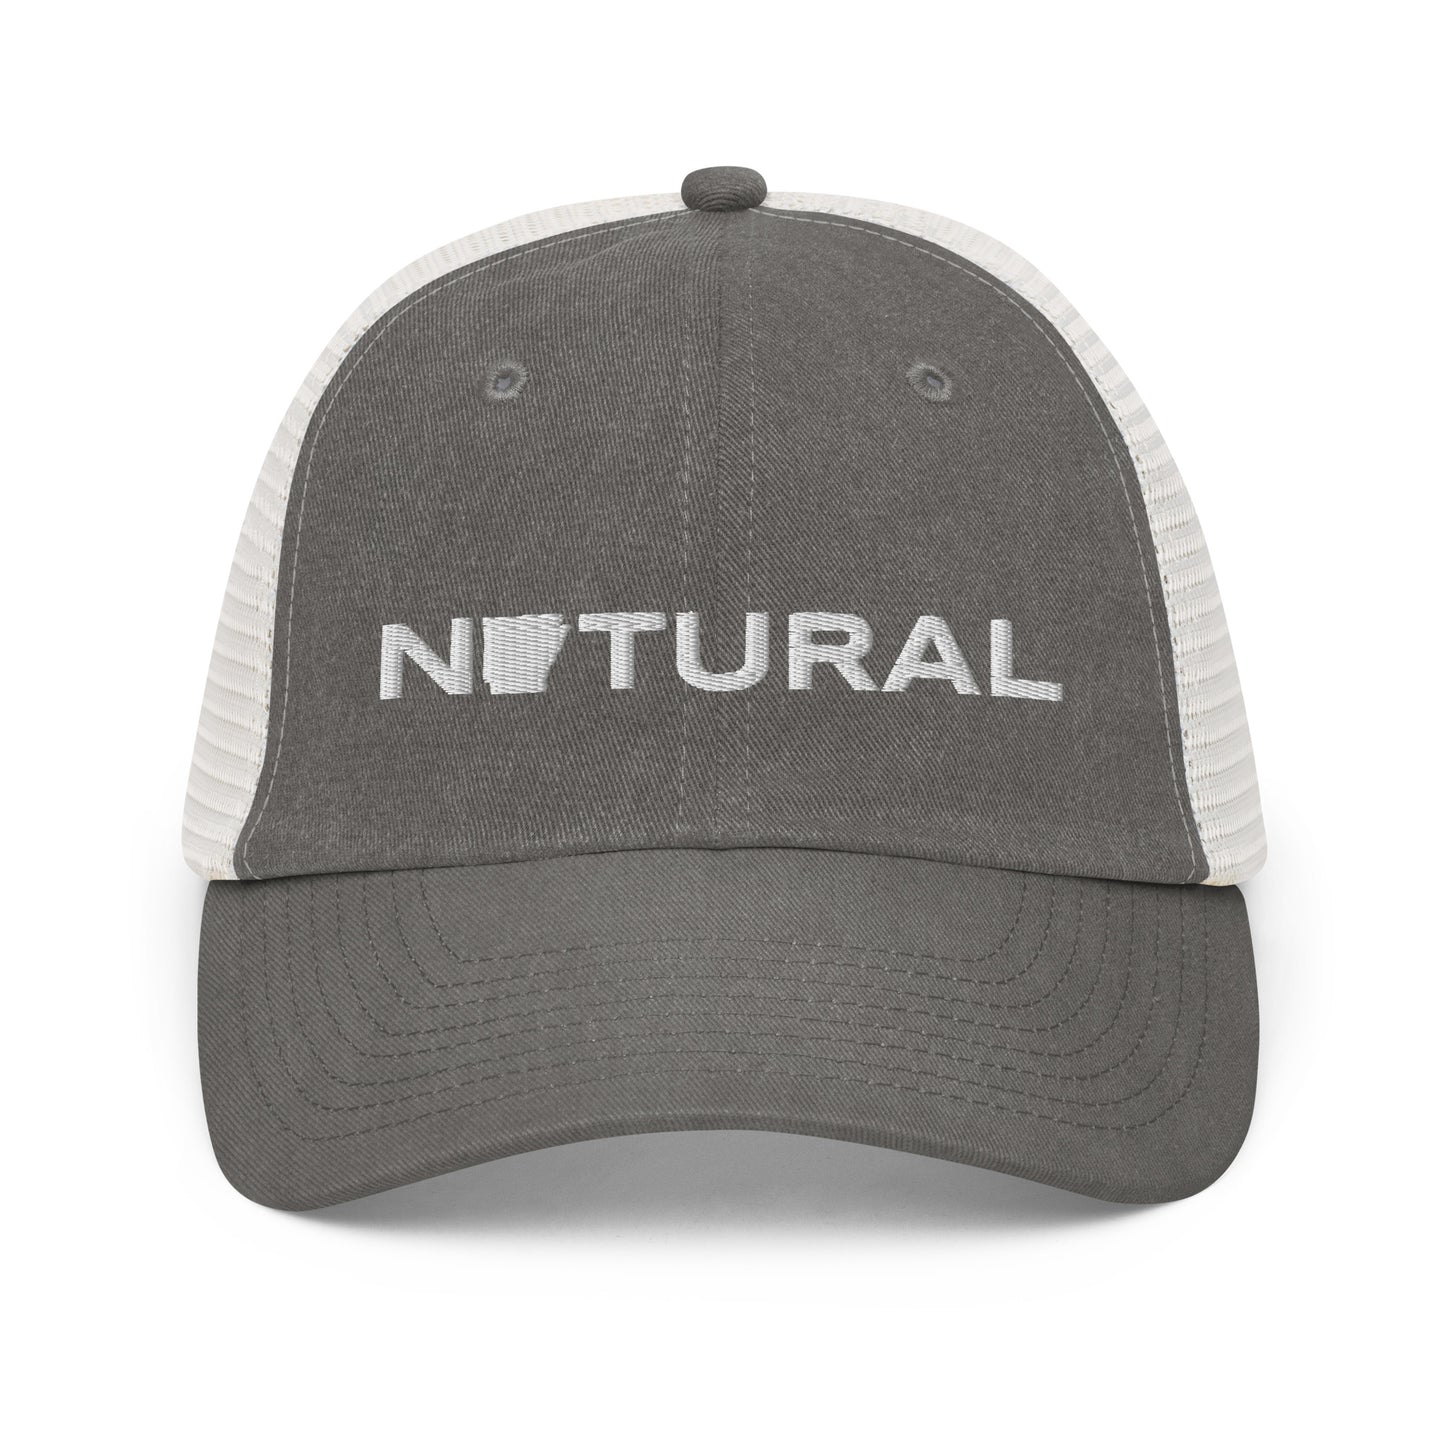 Arkansas Natural Mesh Trucker Hat